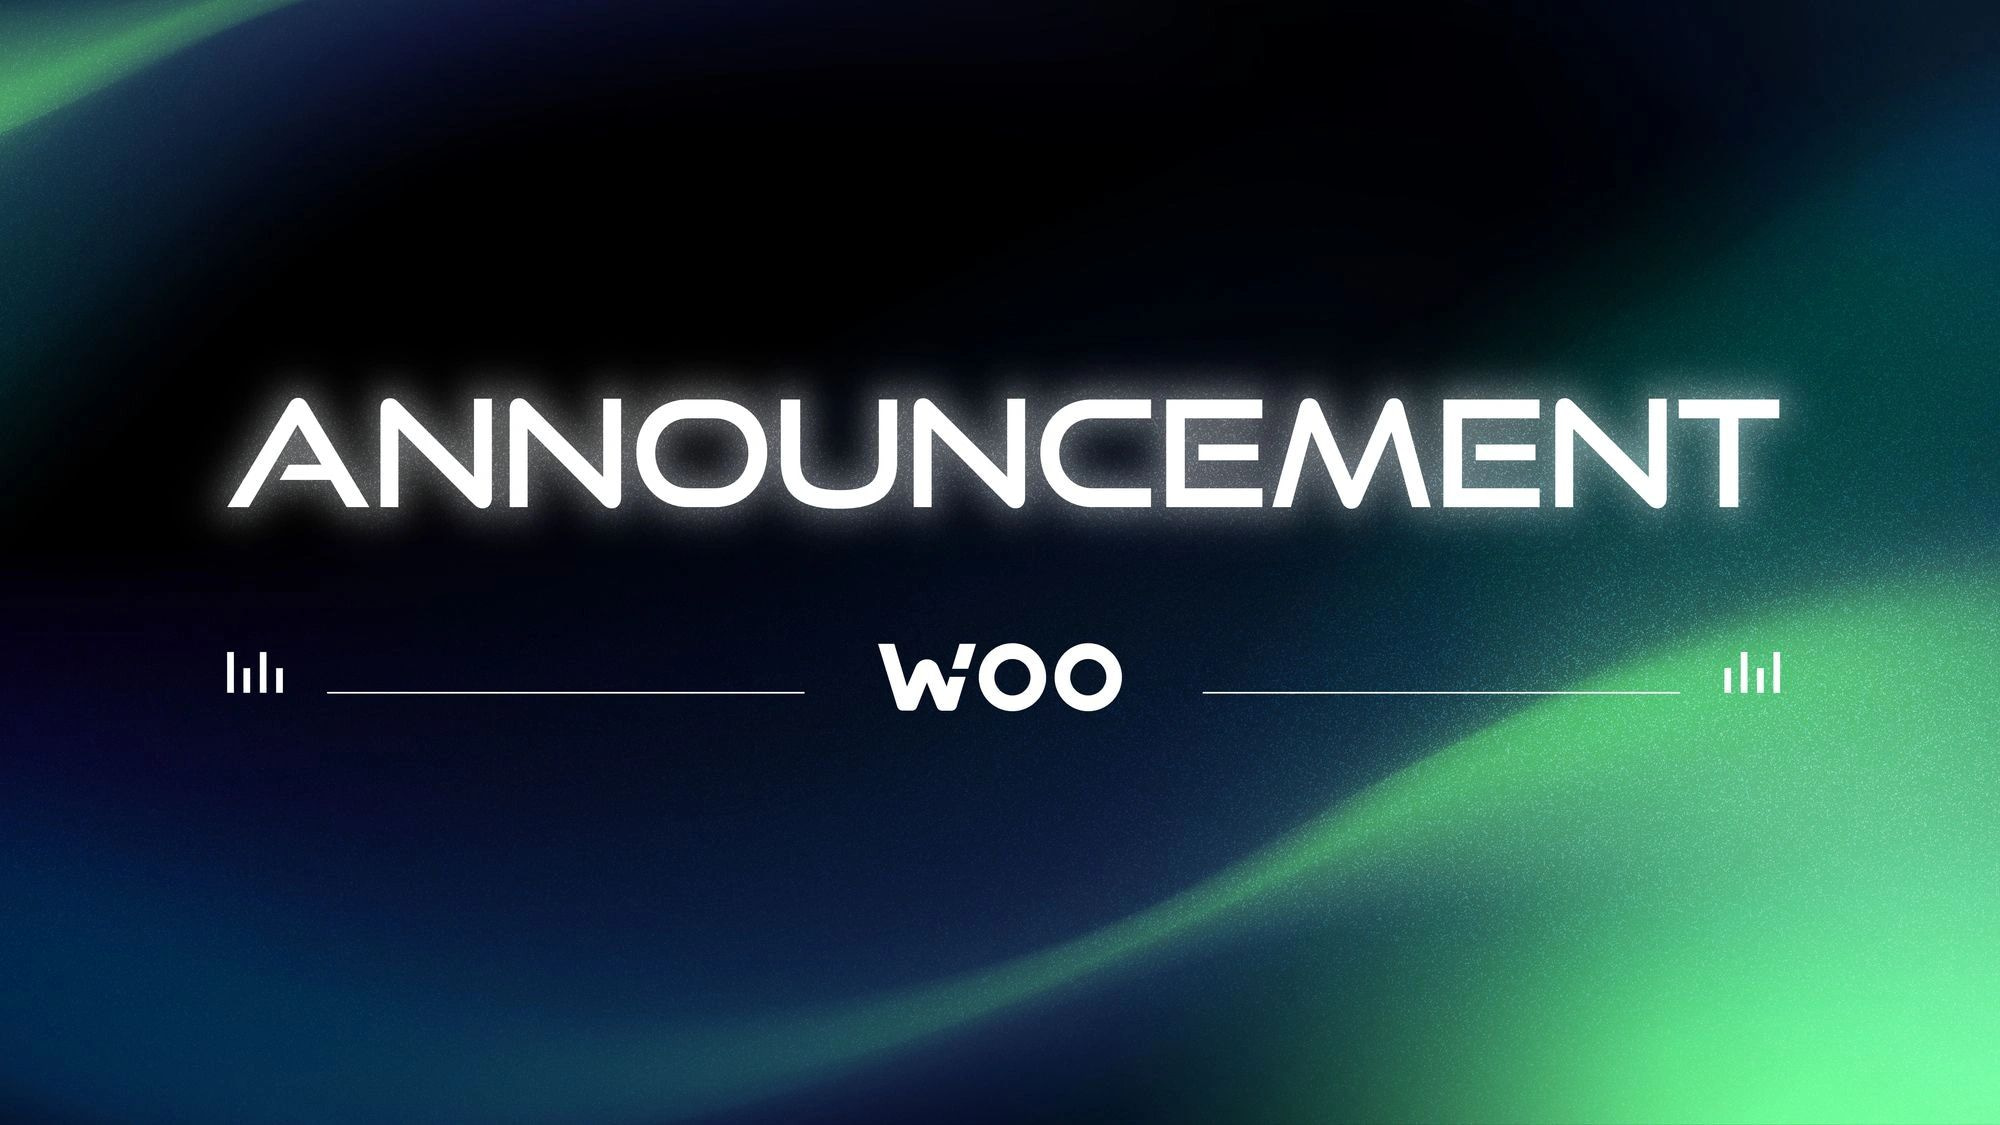 WOO X integrates with S. Korea’s 2nd largest crypto-exchange Bithumb